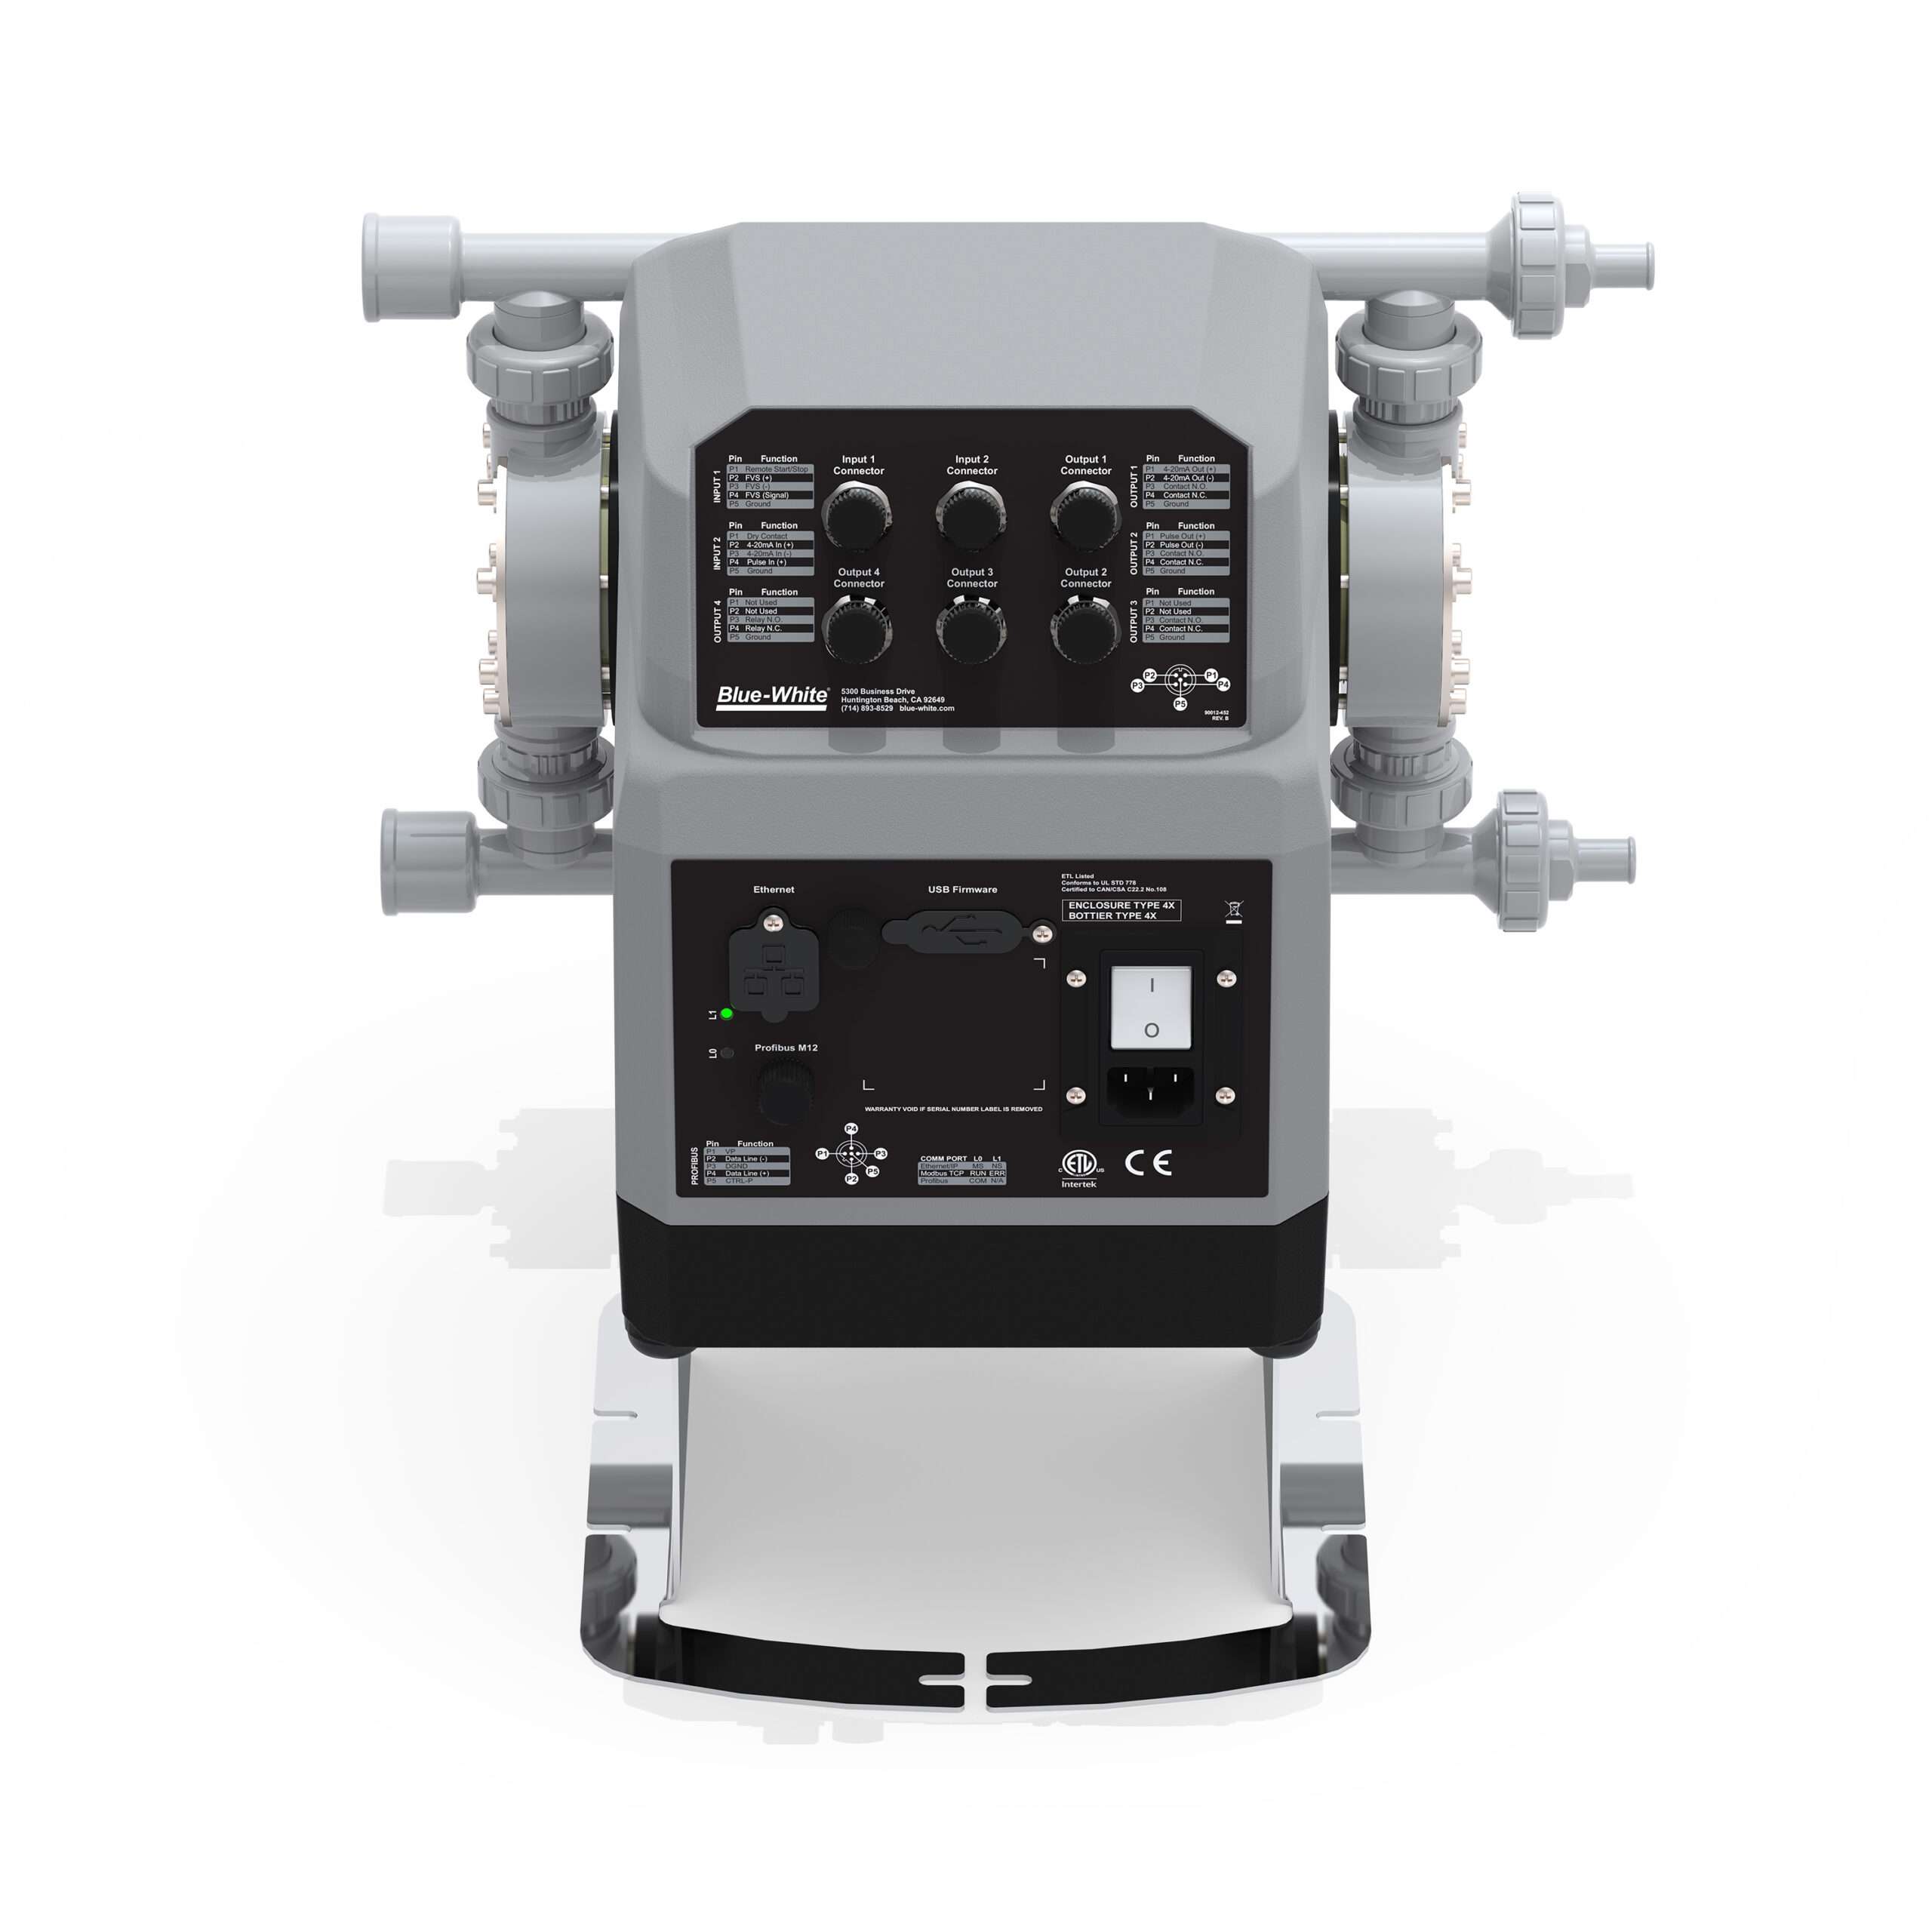 CHEM-FEED® CD3 Multi-Diaphragm Metering Pump for Industrial Applications